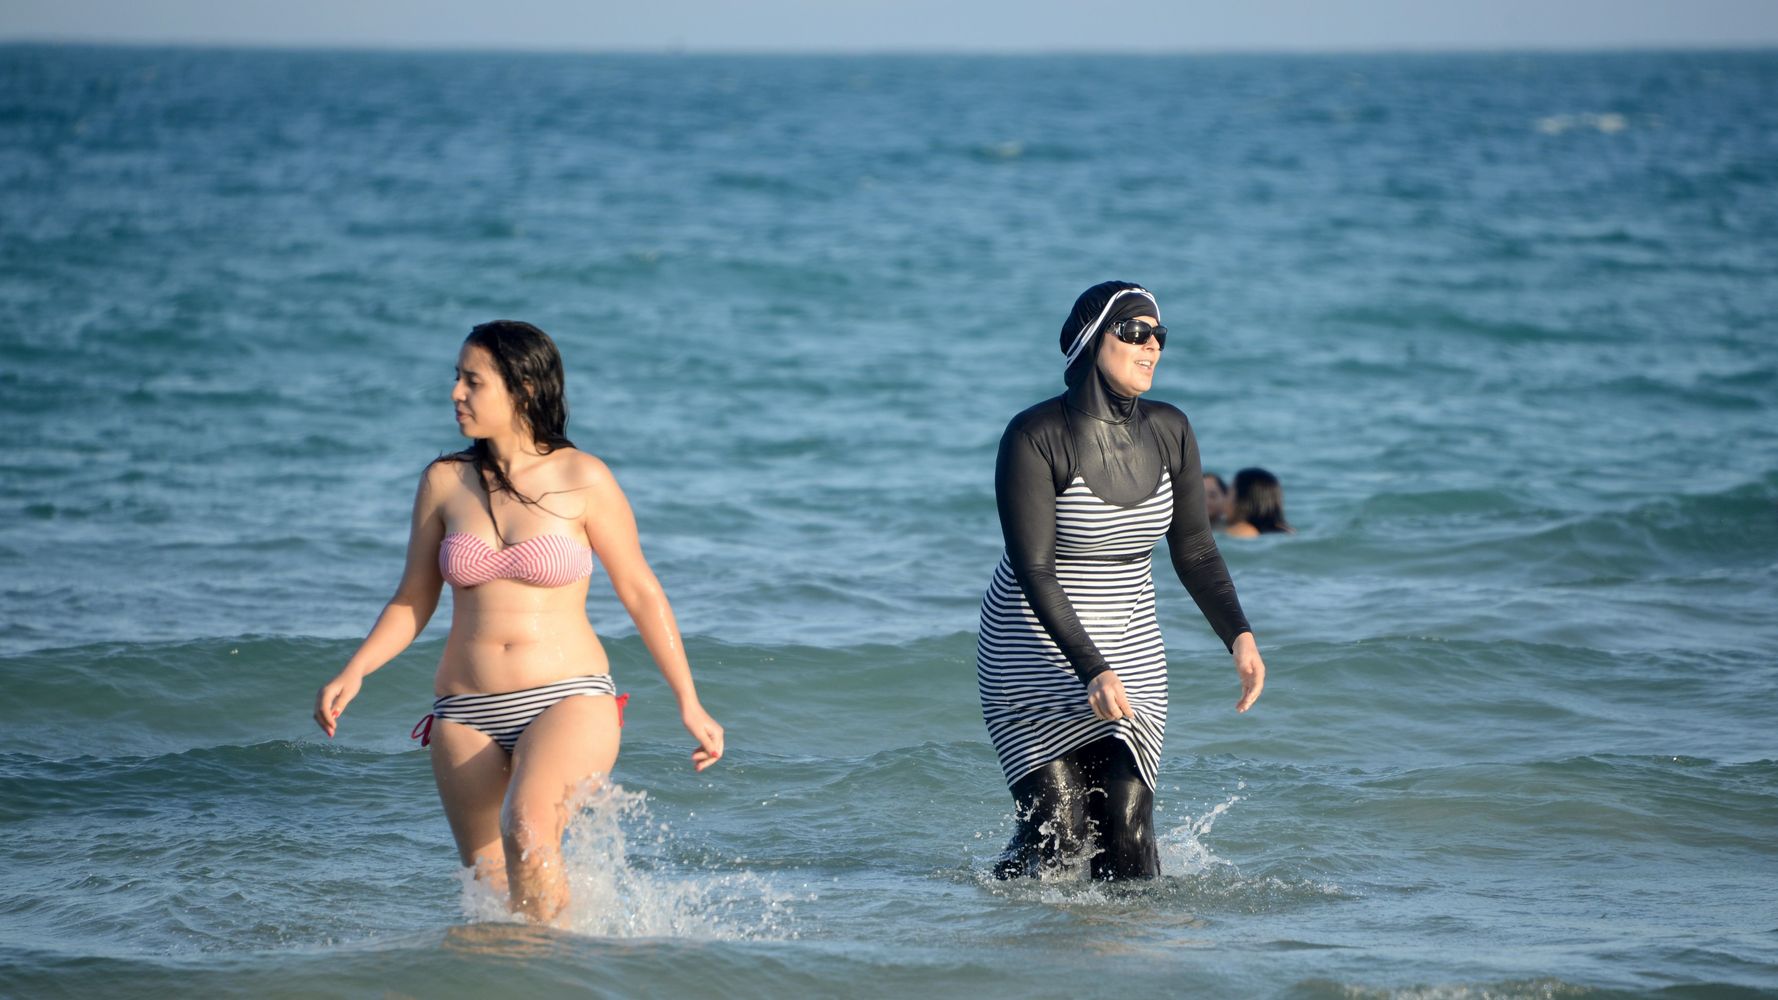 Hot Teen Nude Beach - Why I'd Choose A Burkini Over A Bikini | HuffPost Women